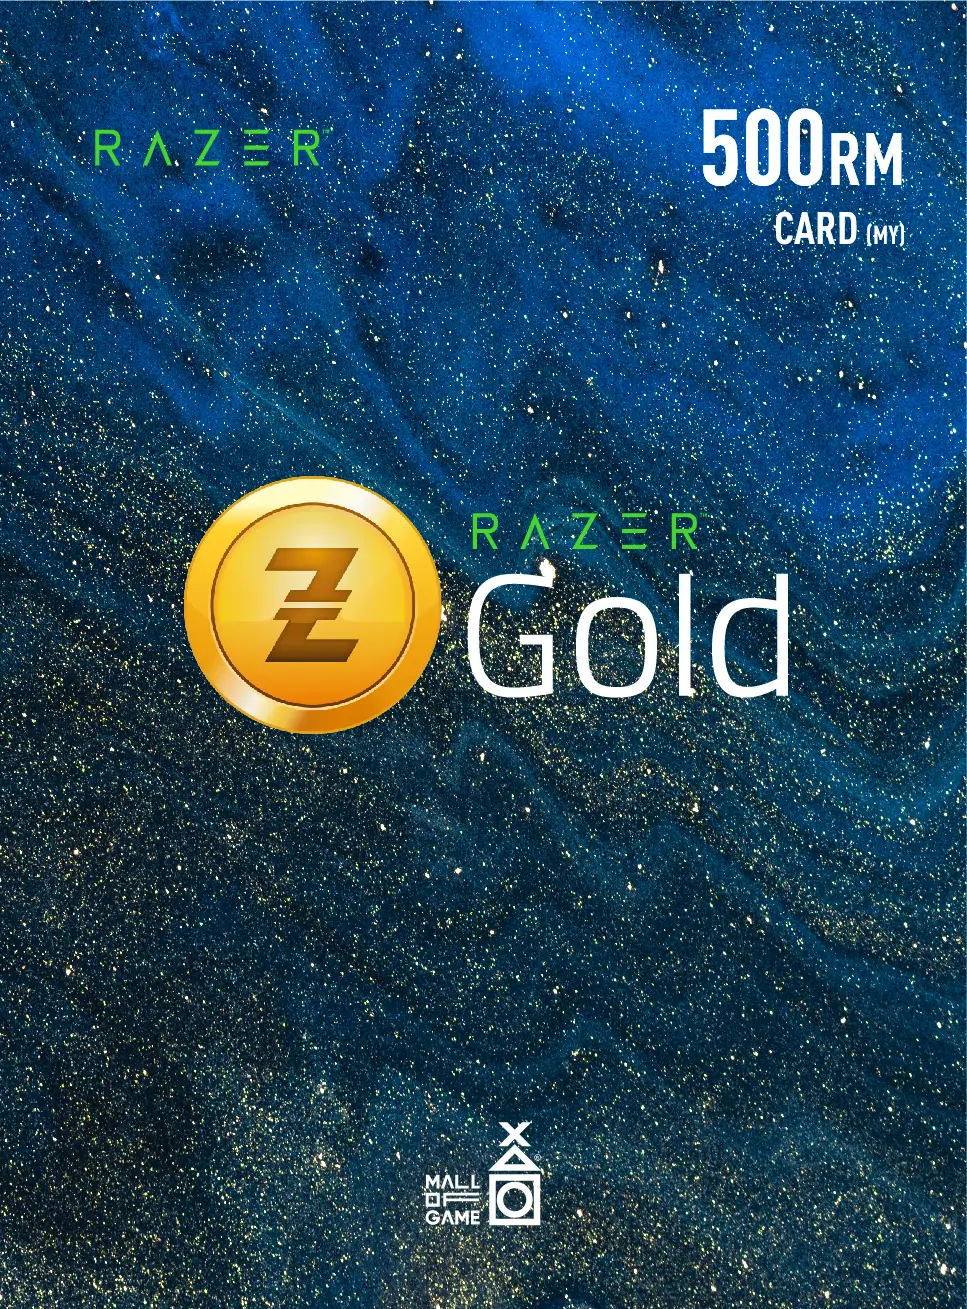 Razer Gold RM500 (MY)